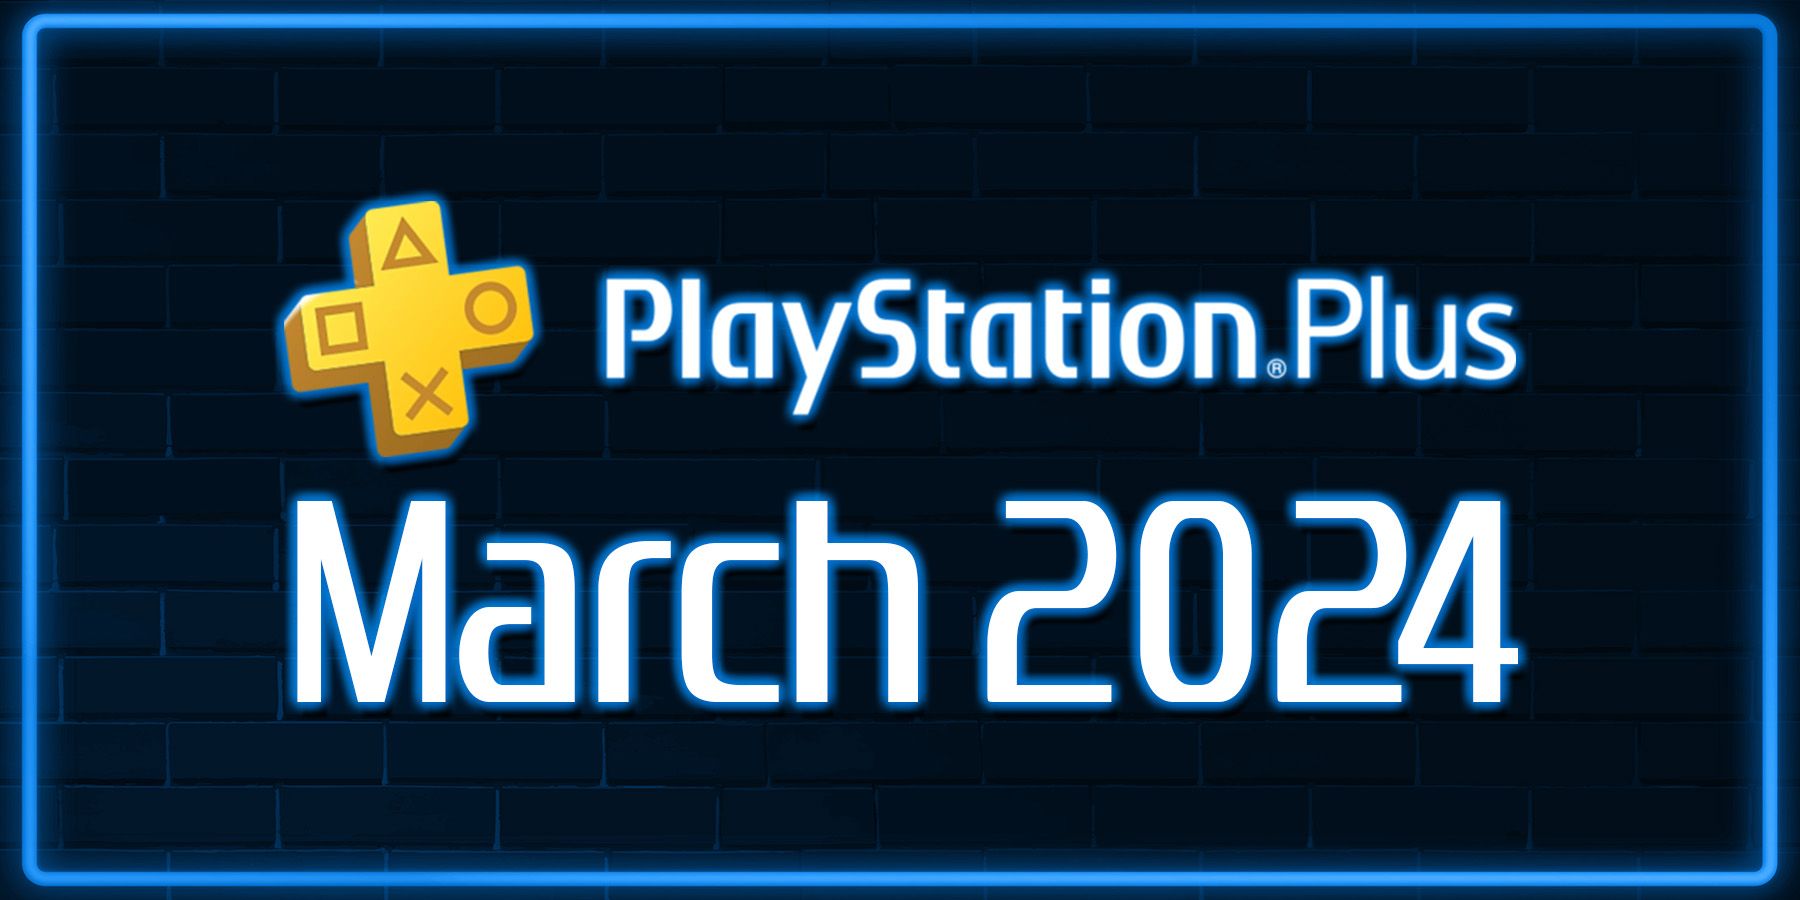 PlayStation Plus logo above March 2024 tagline on dark blue neon lit wall